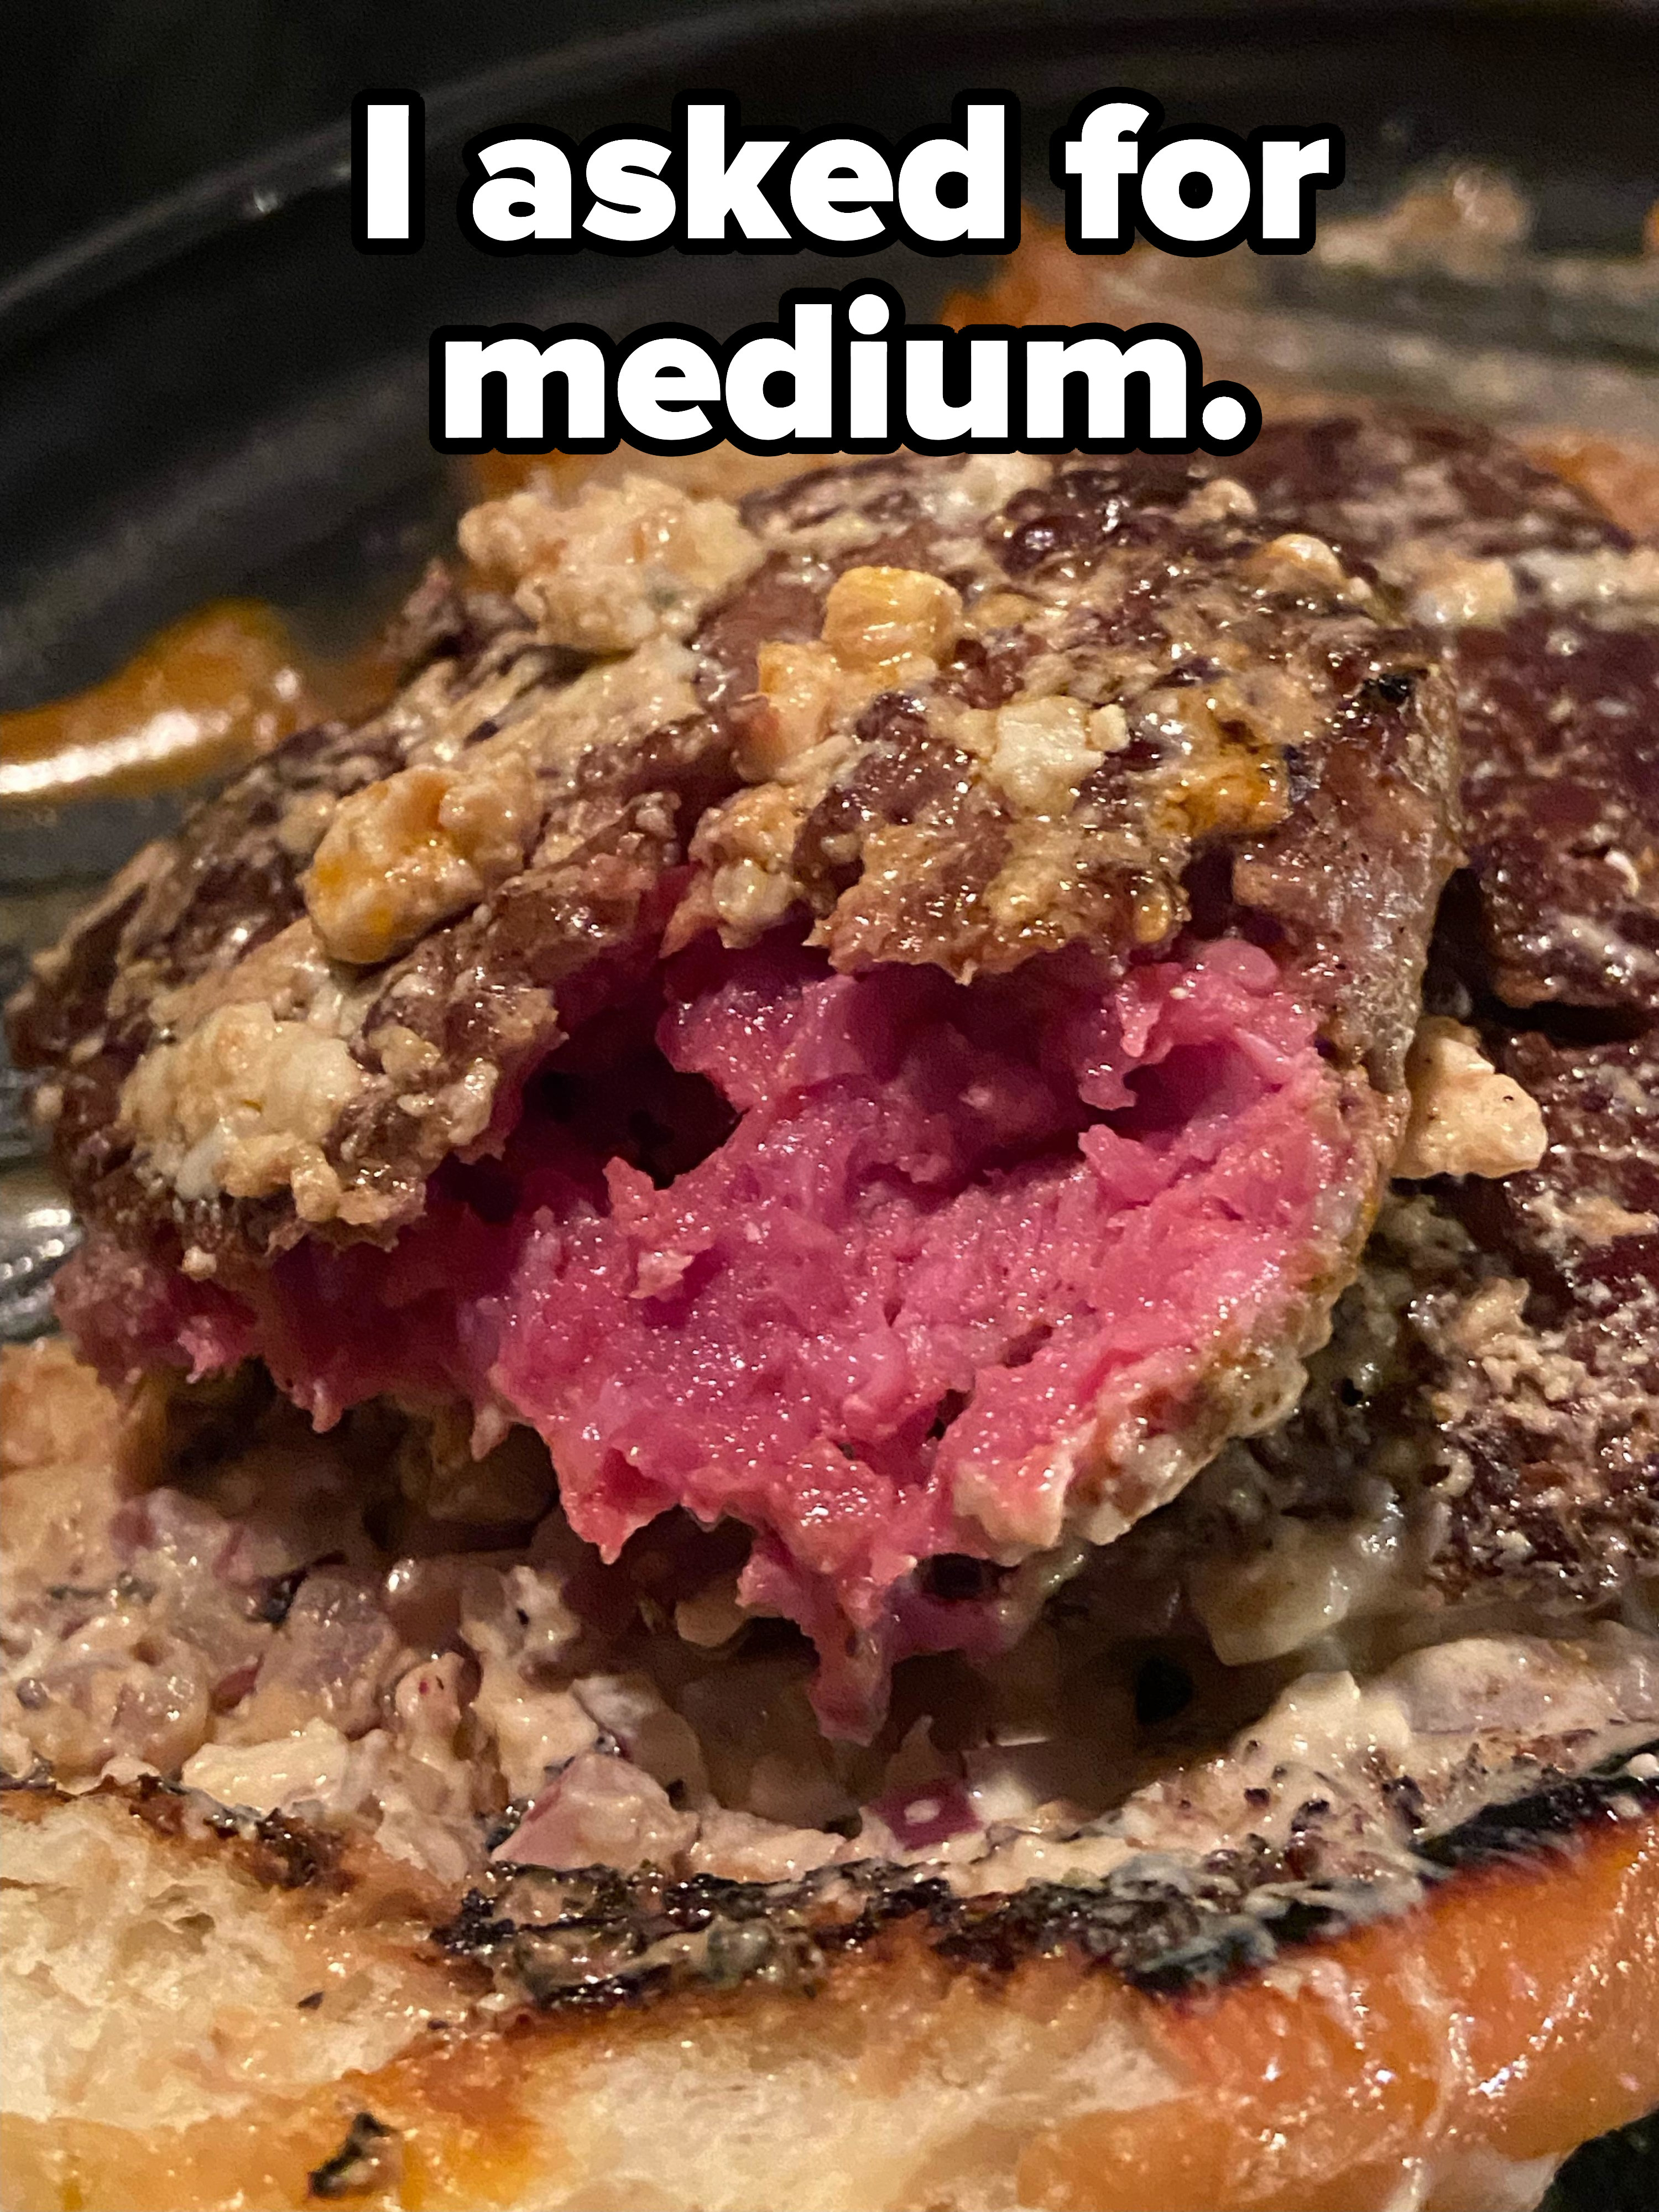 Raw burger inside a bun when person asked for medium